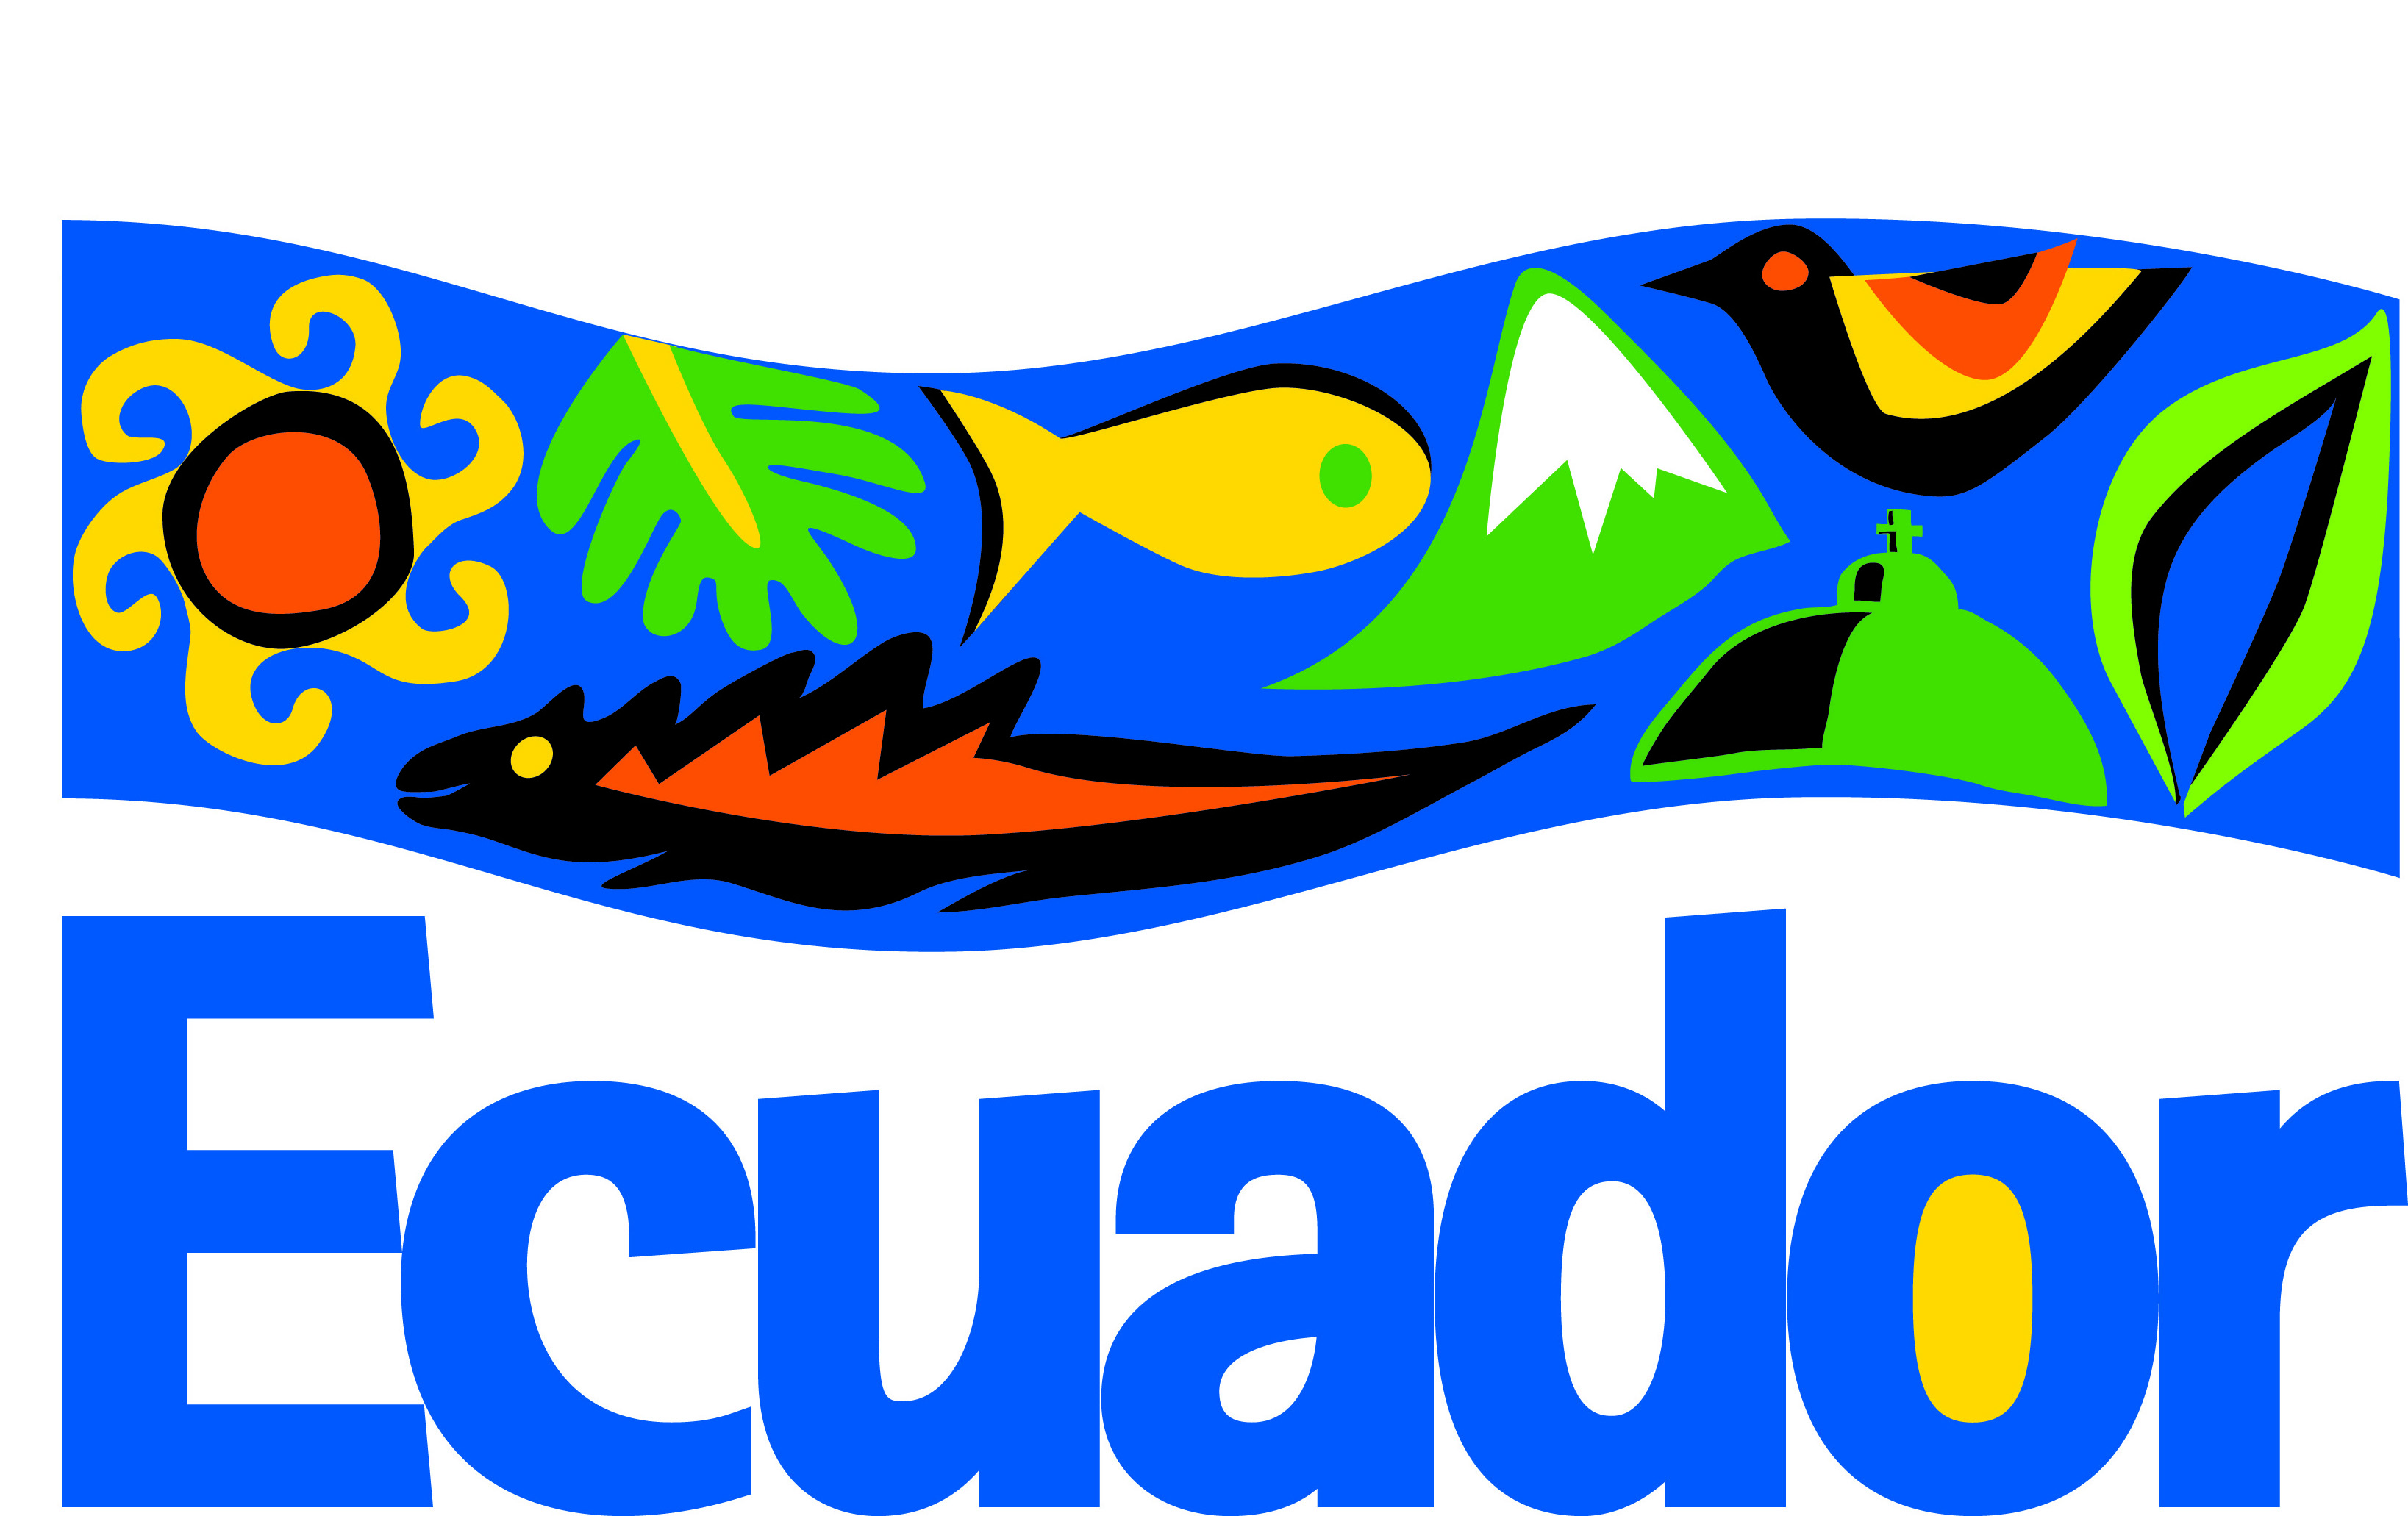 Die ersten Tage in Ecuador